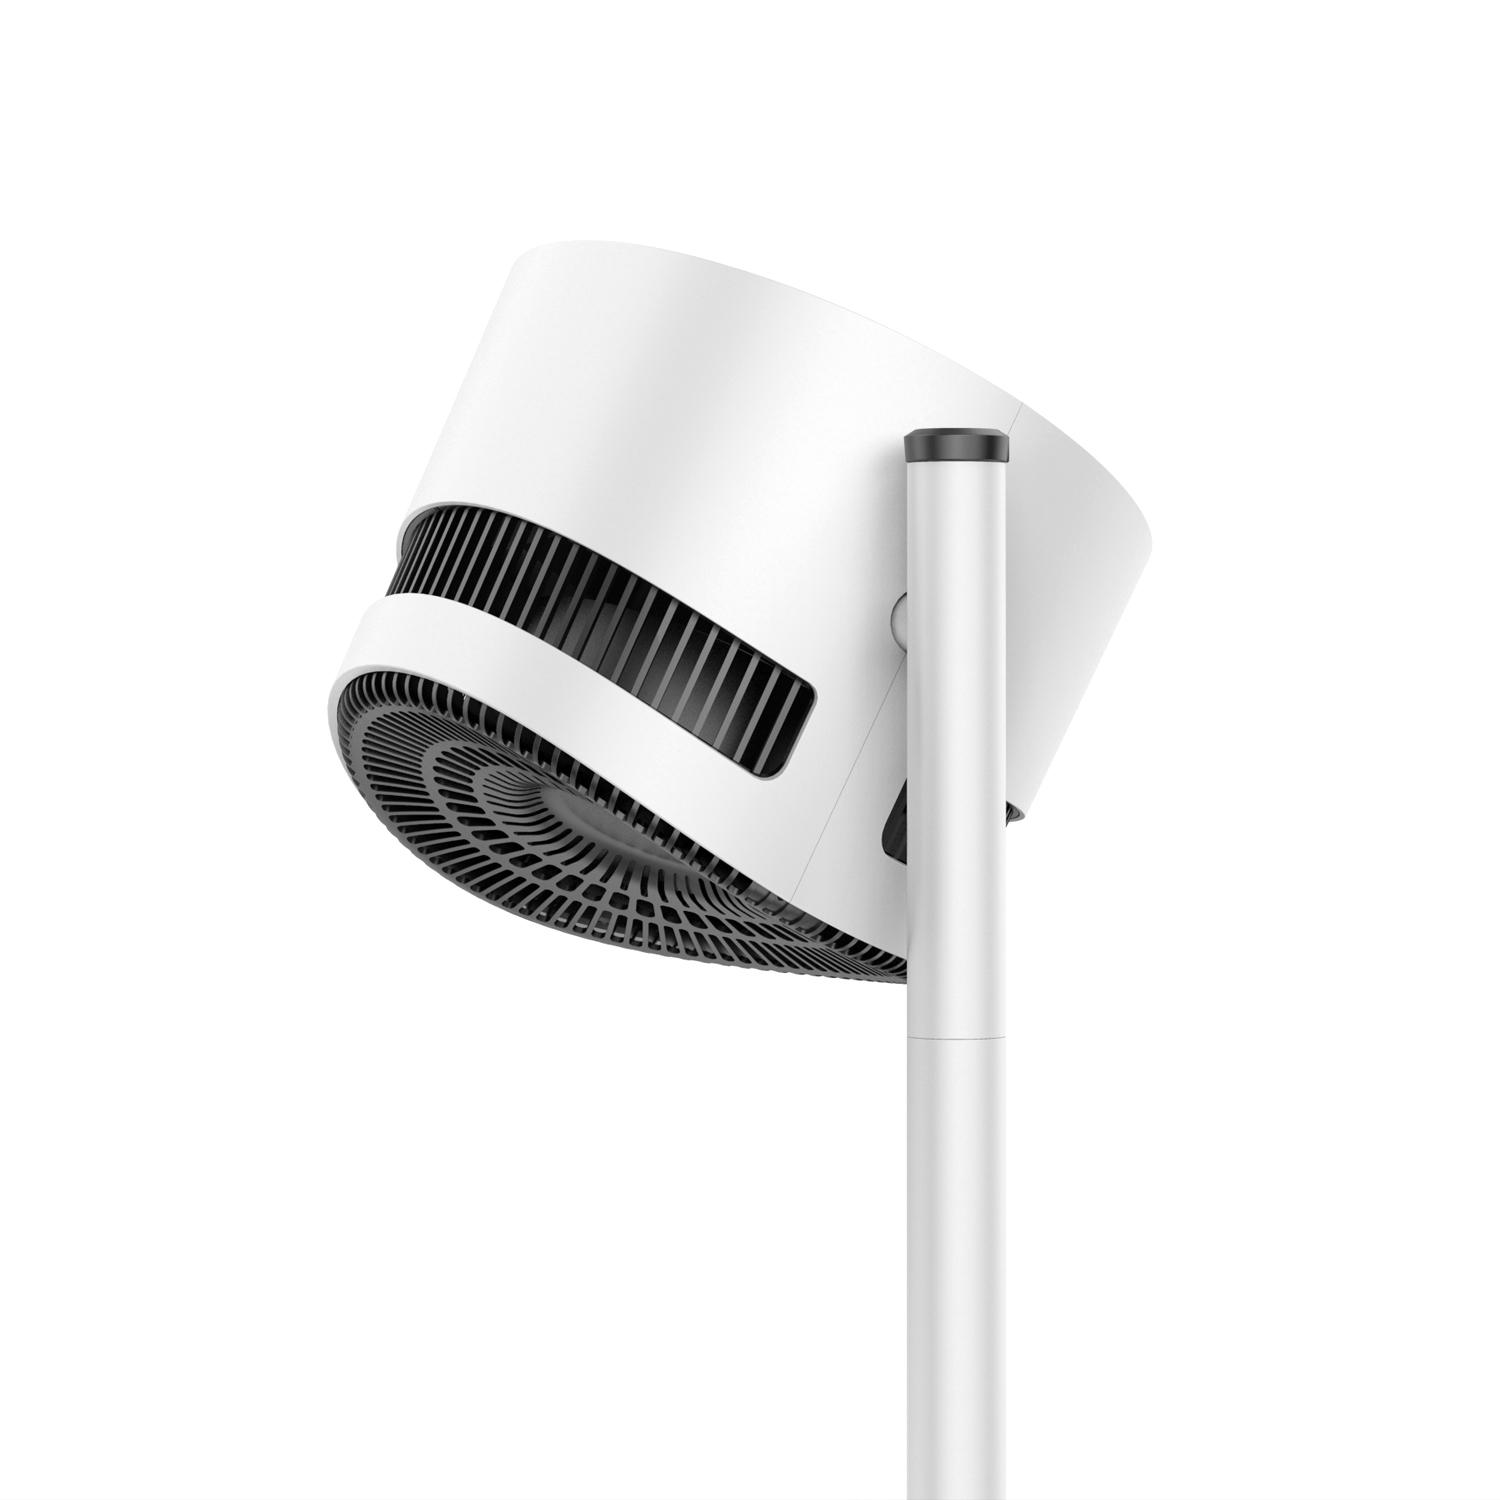 Industrial design render details of the new Boneco domestic fan range